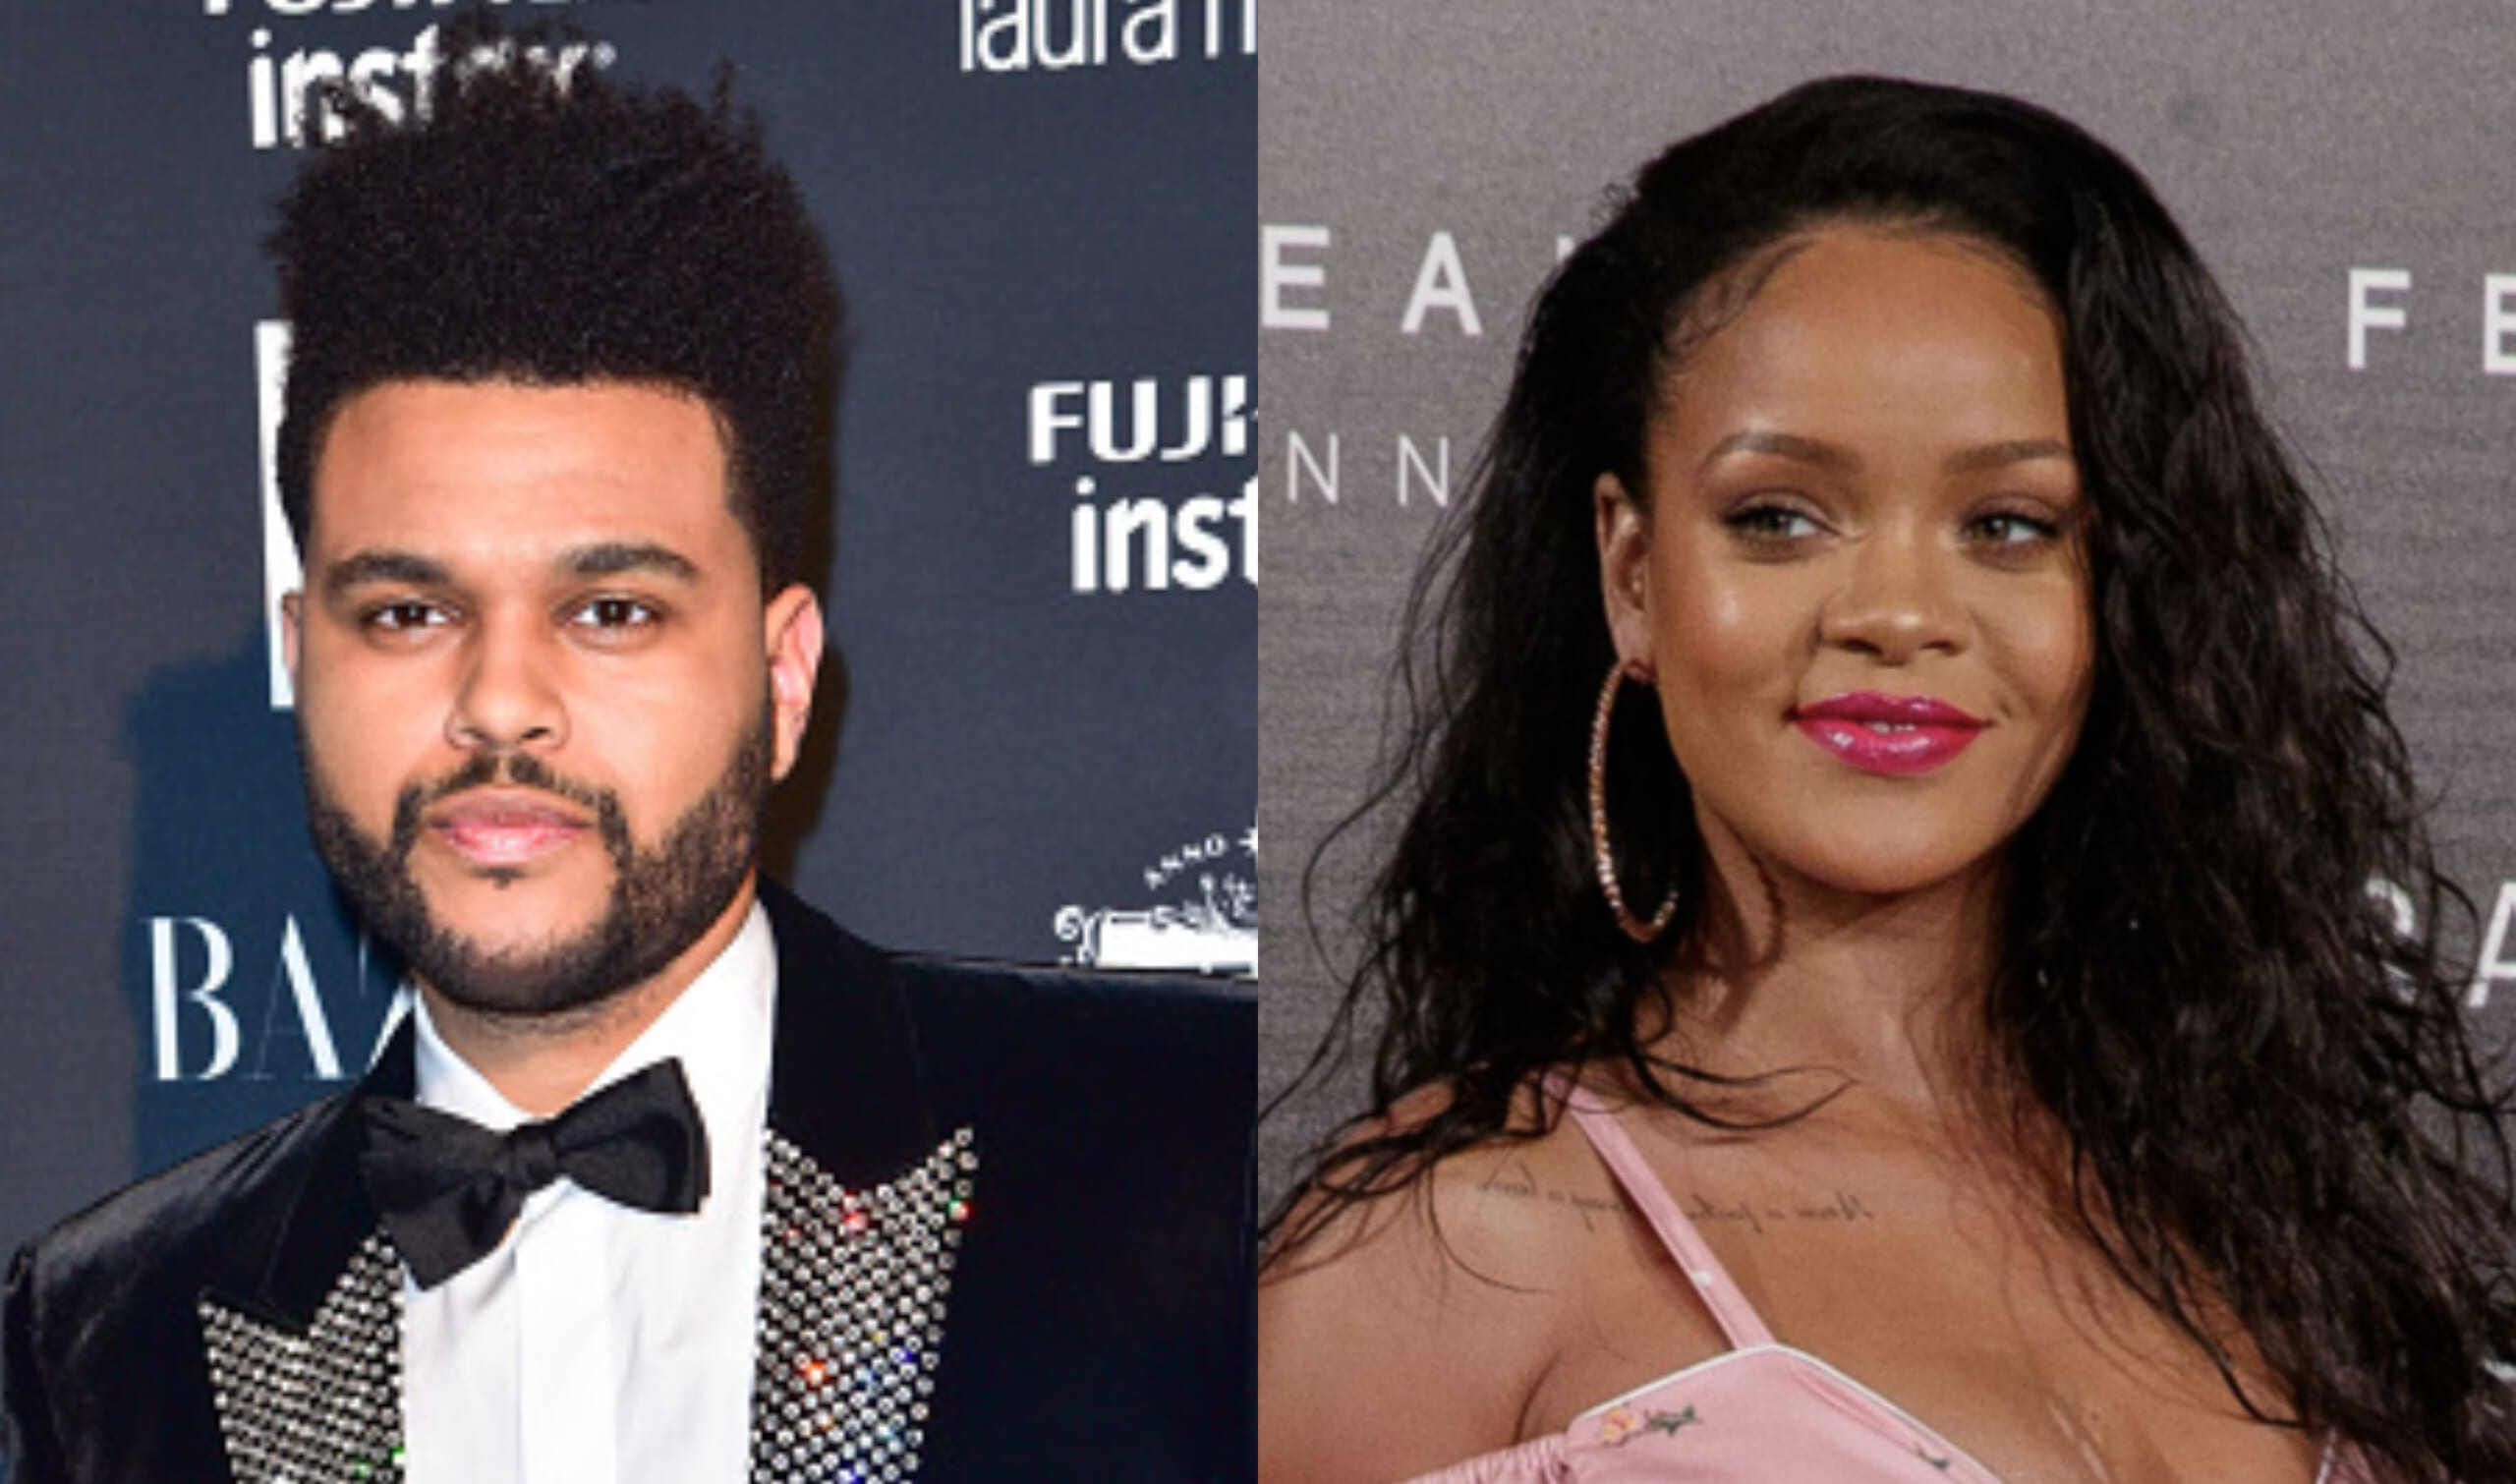 The Weeknd and Rihanna